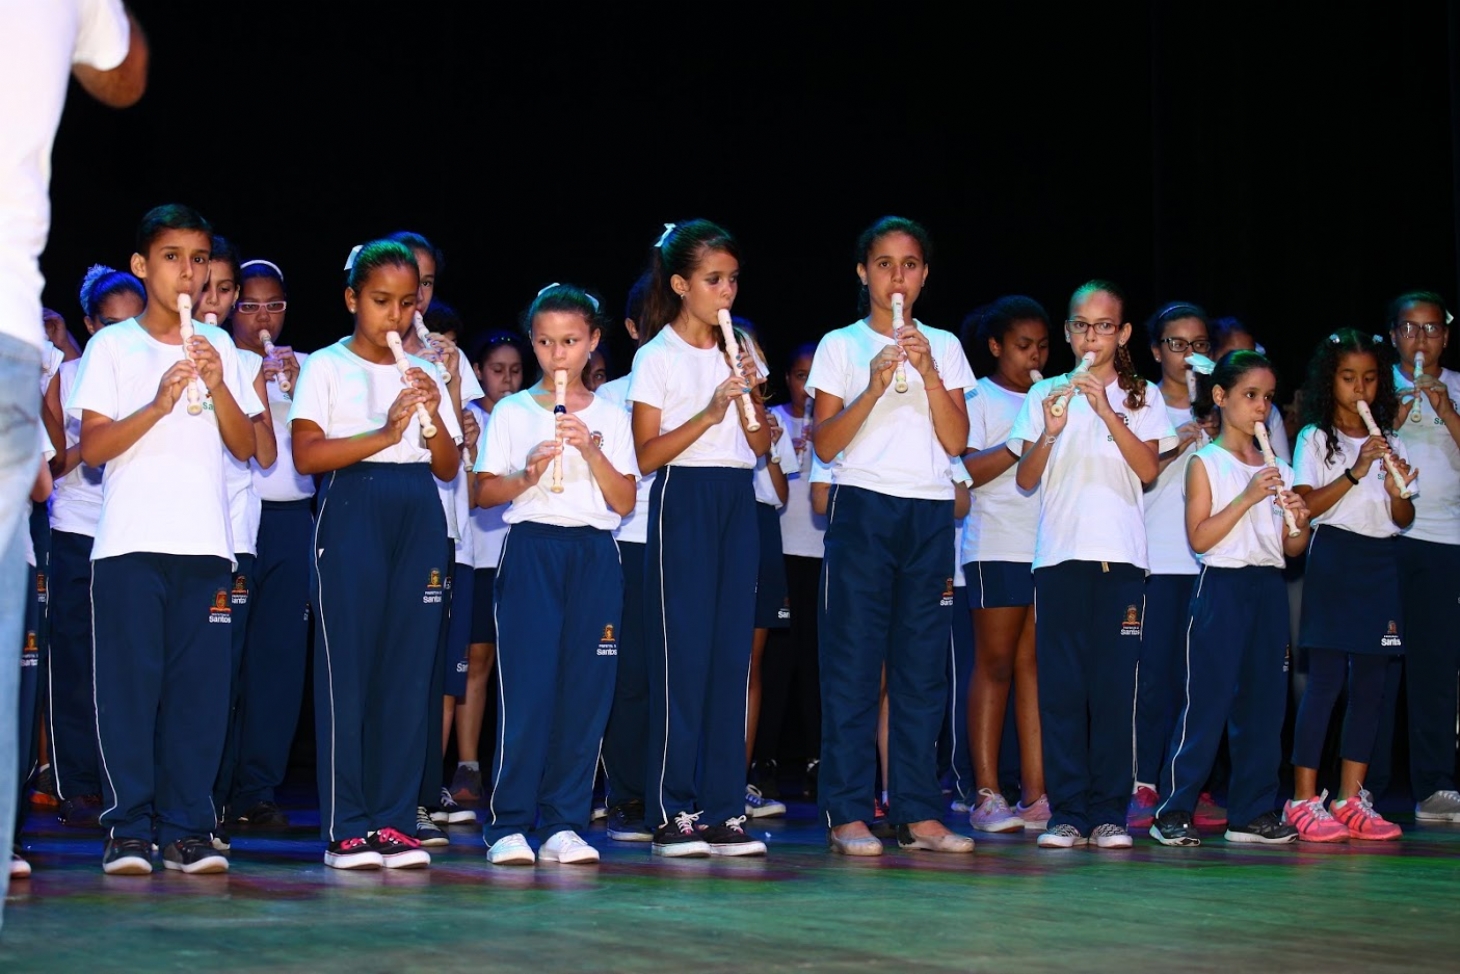 Encontro de flautas reúne 120 alunos no Teatro Guarany | Jornal da Orla